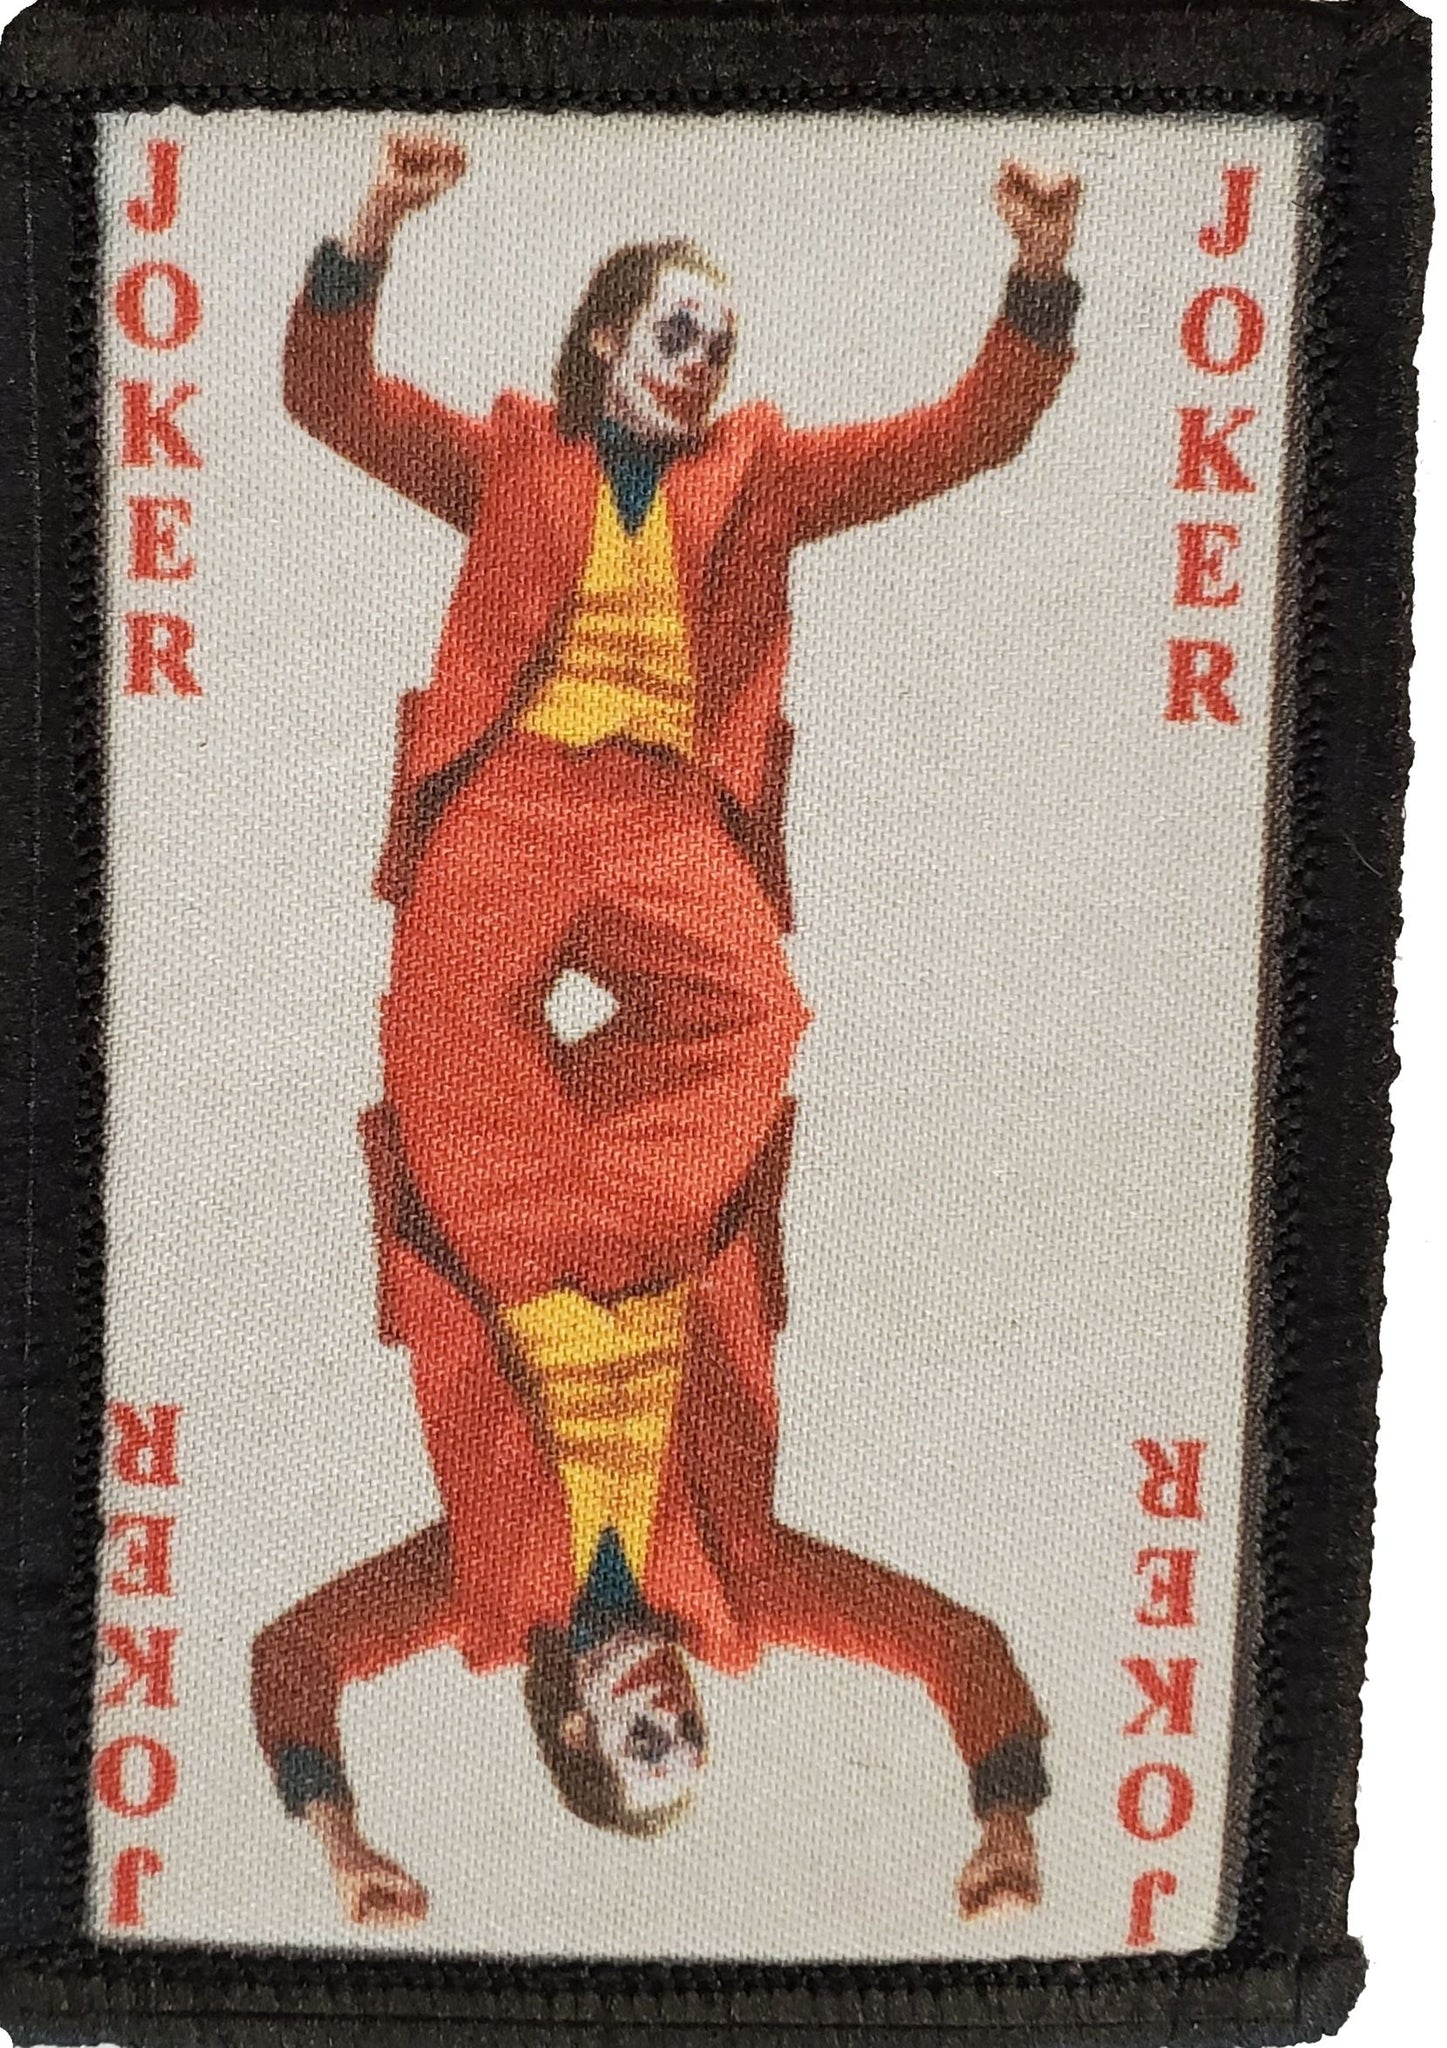 Joker PLaying Card Velcro Morale Patch